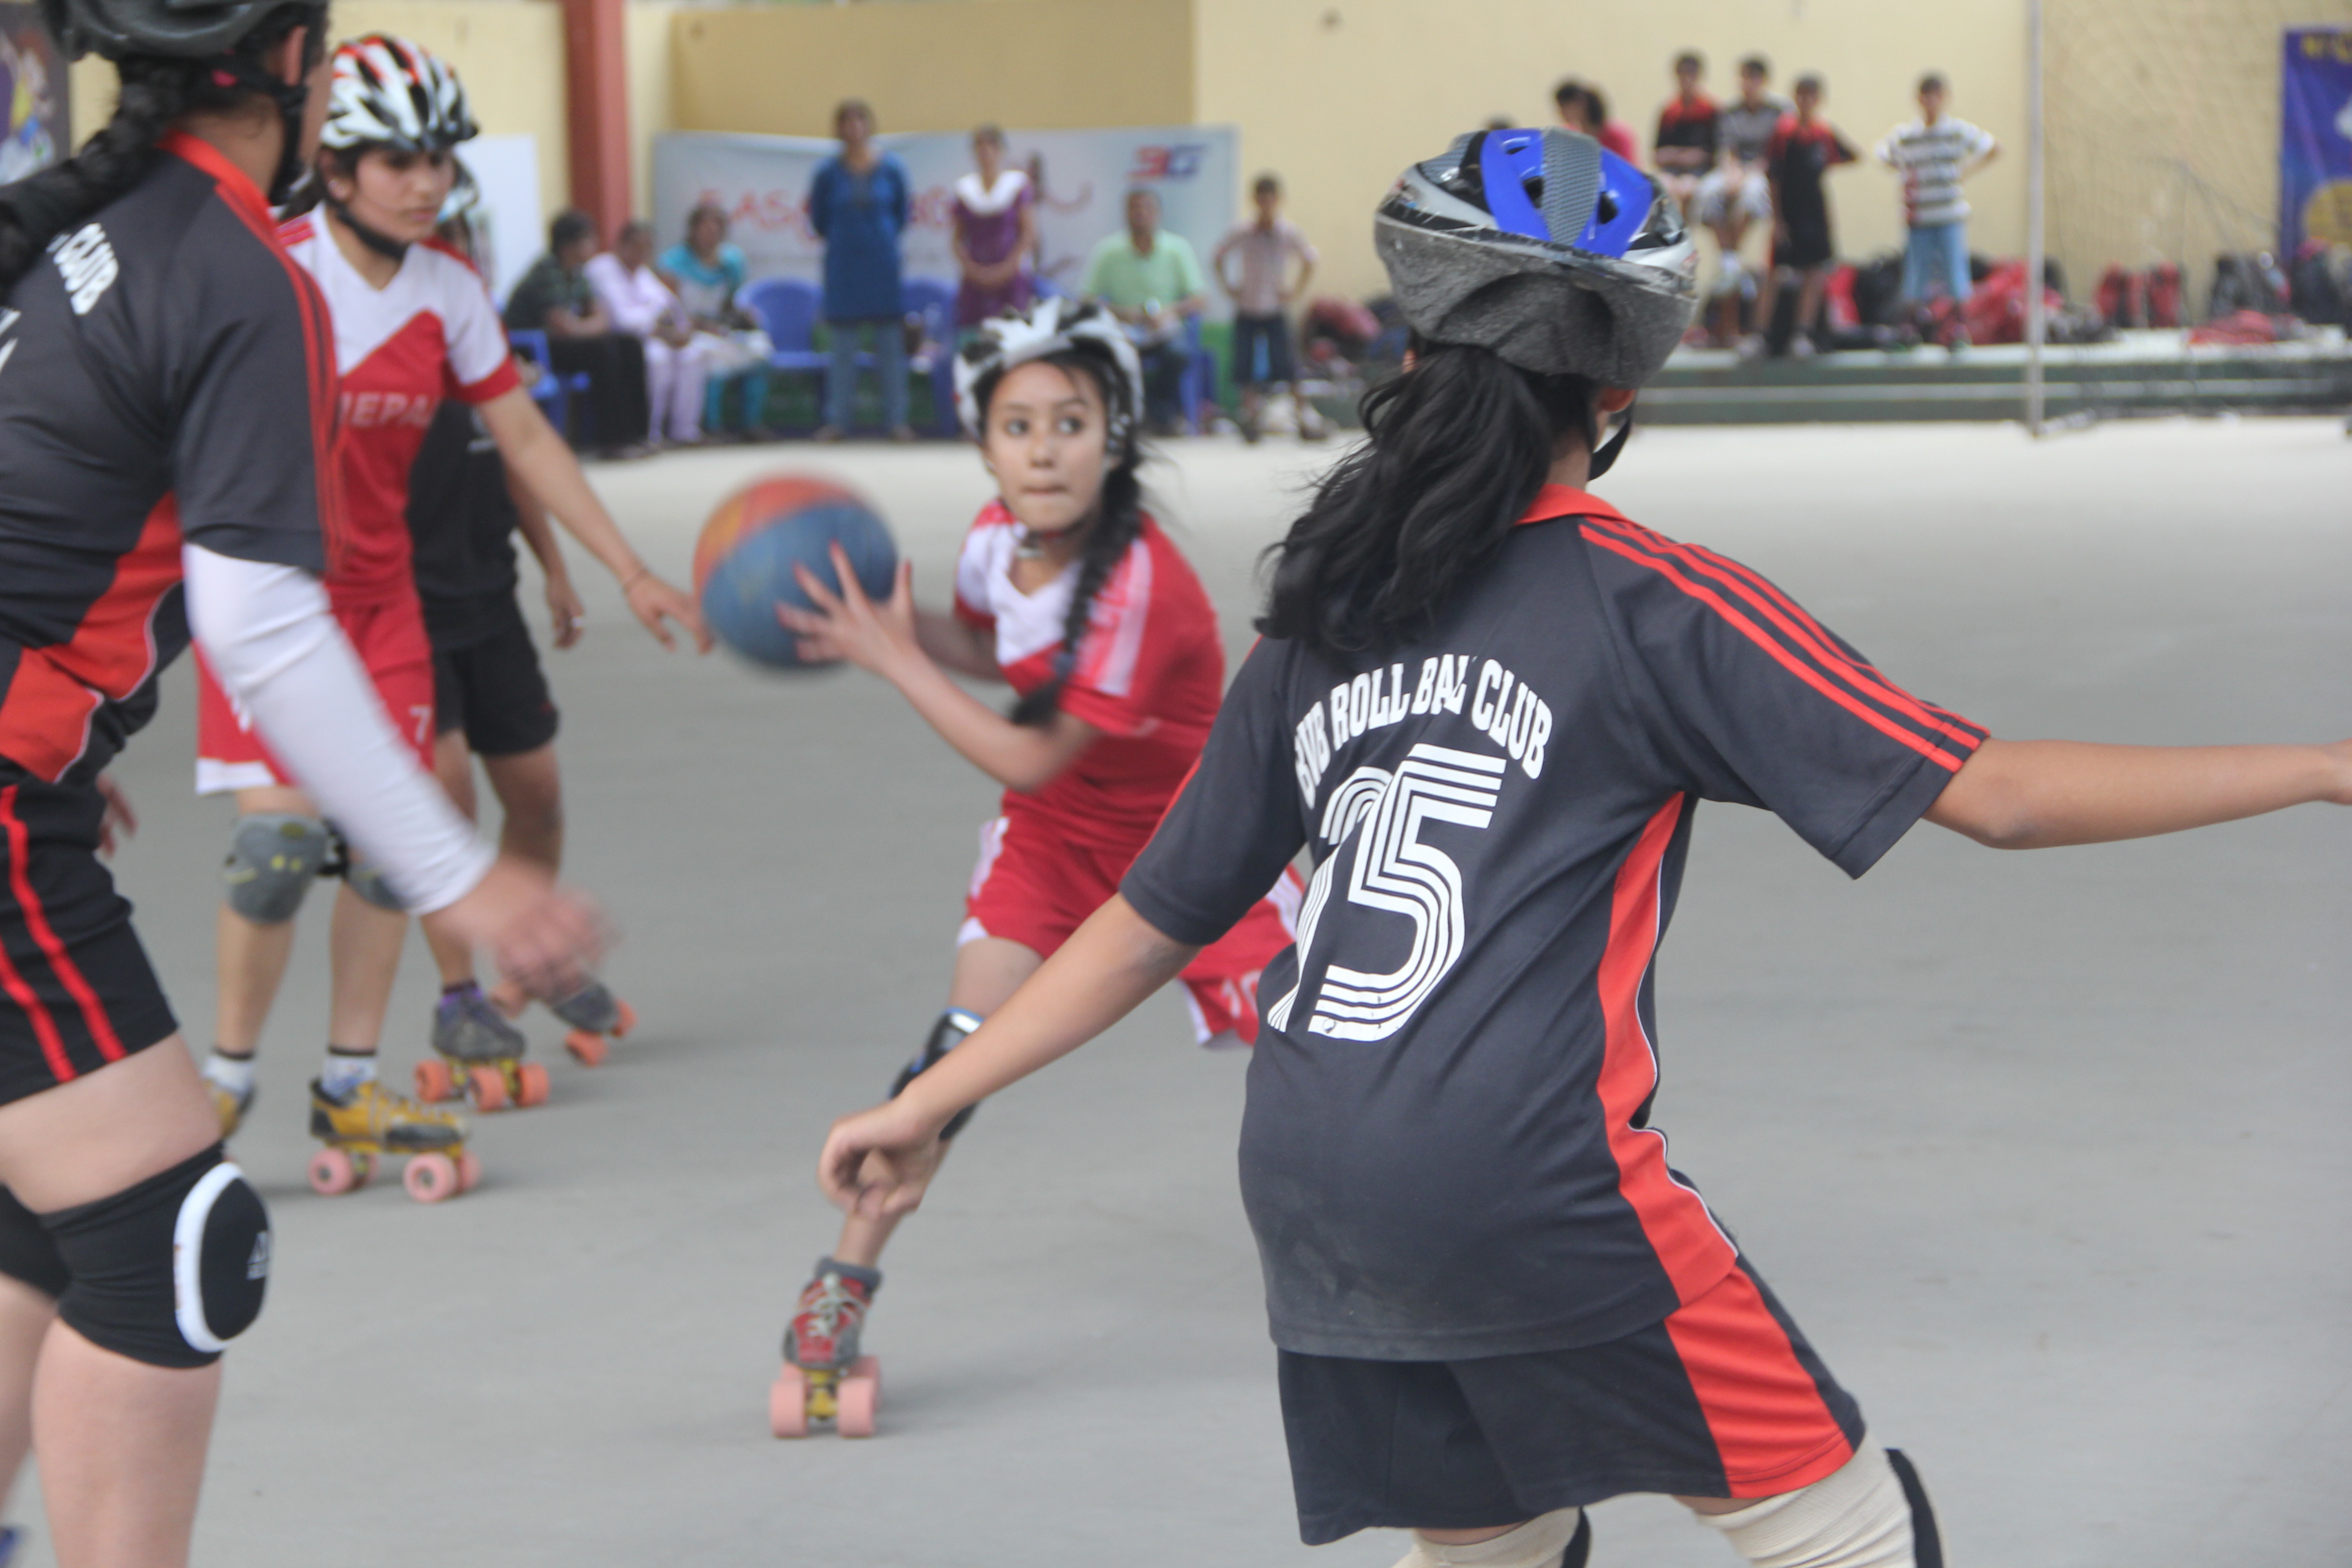 Ist Int'l sports Festival for India & Nepal Public School 2014